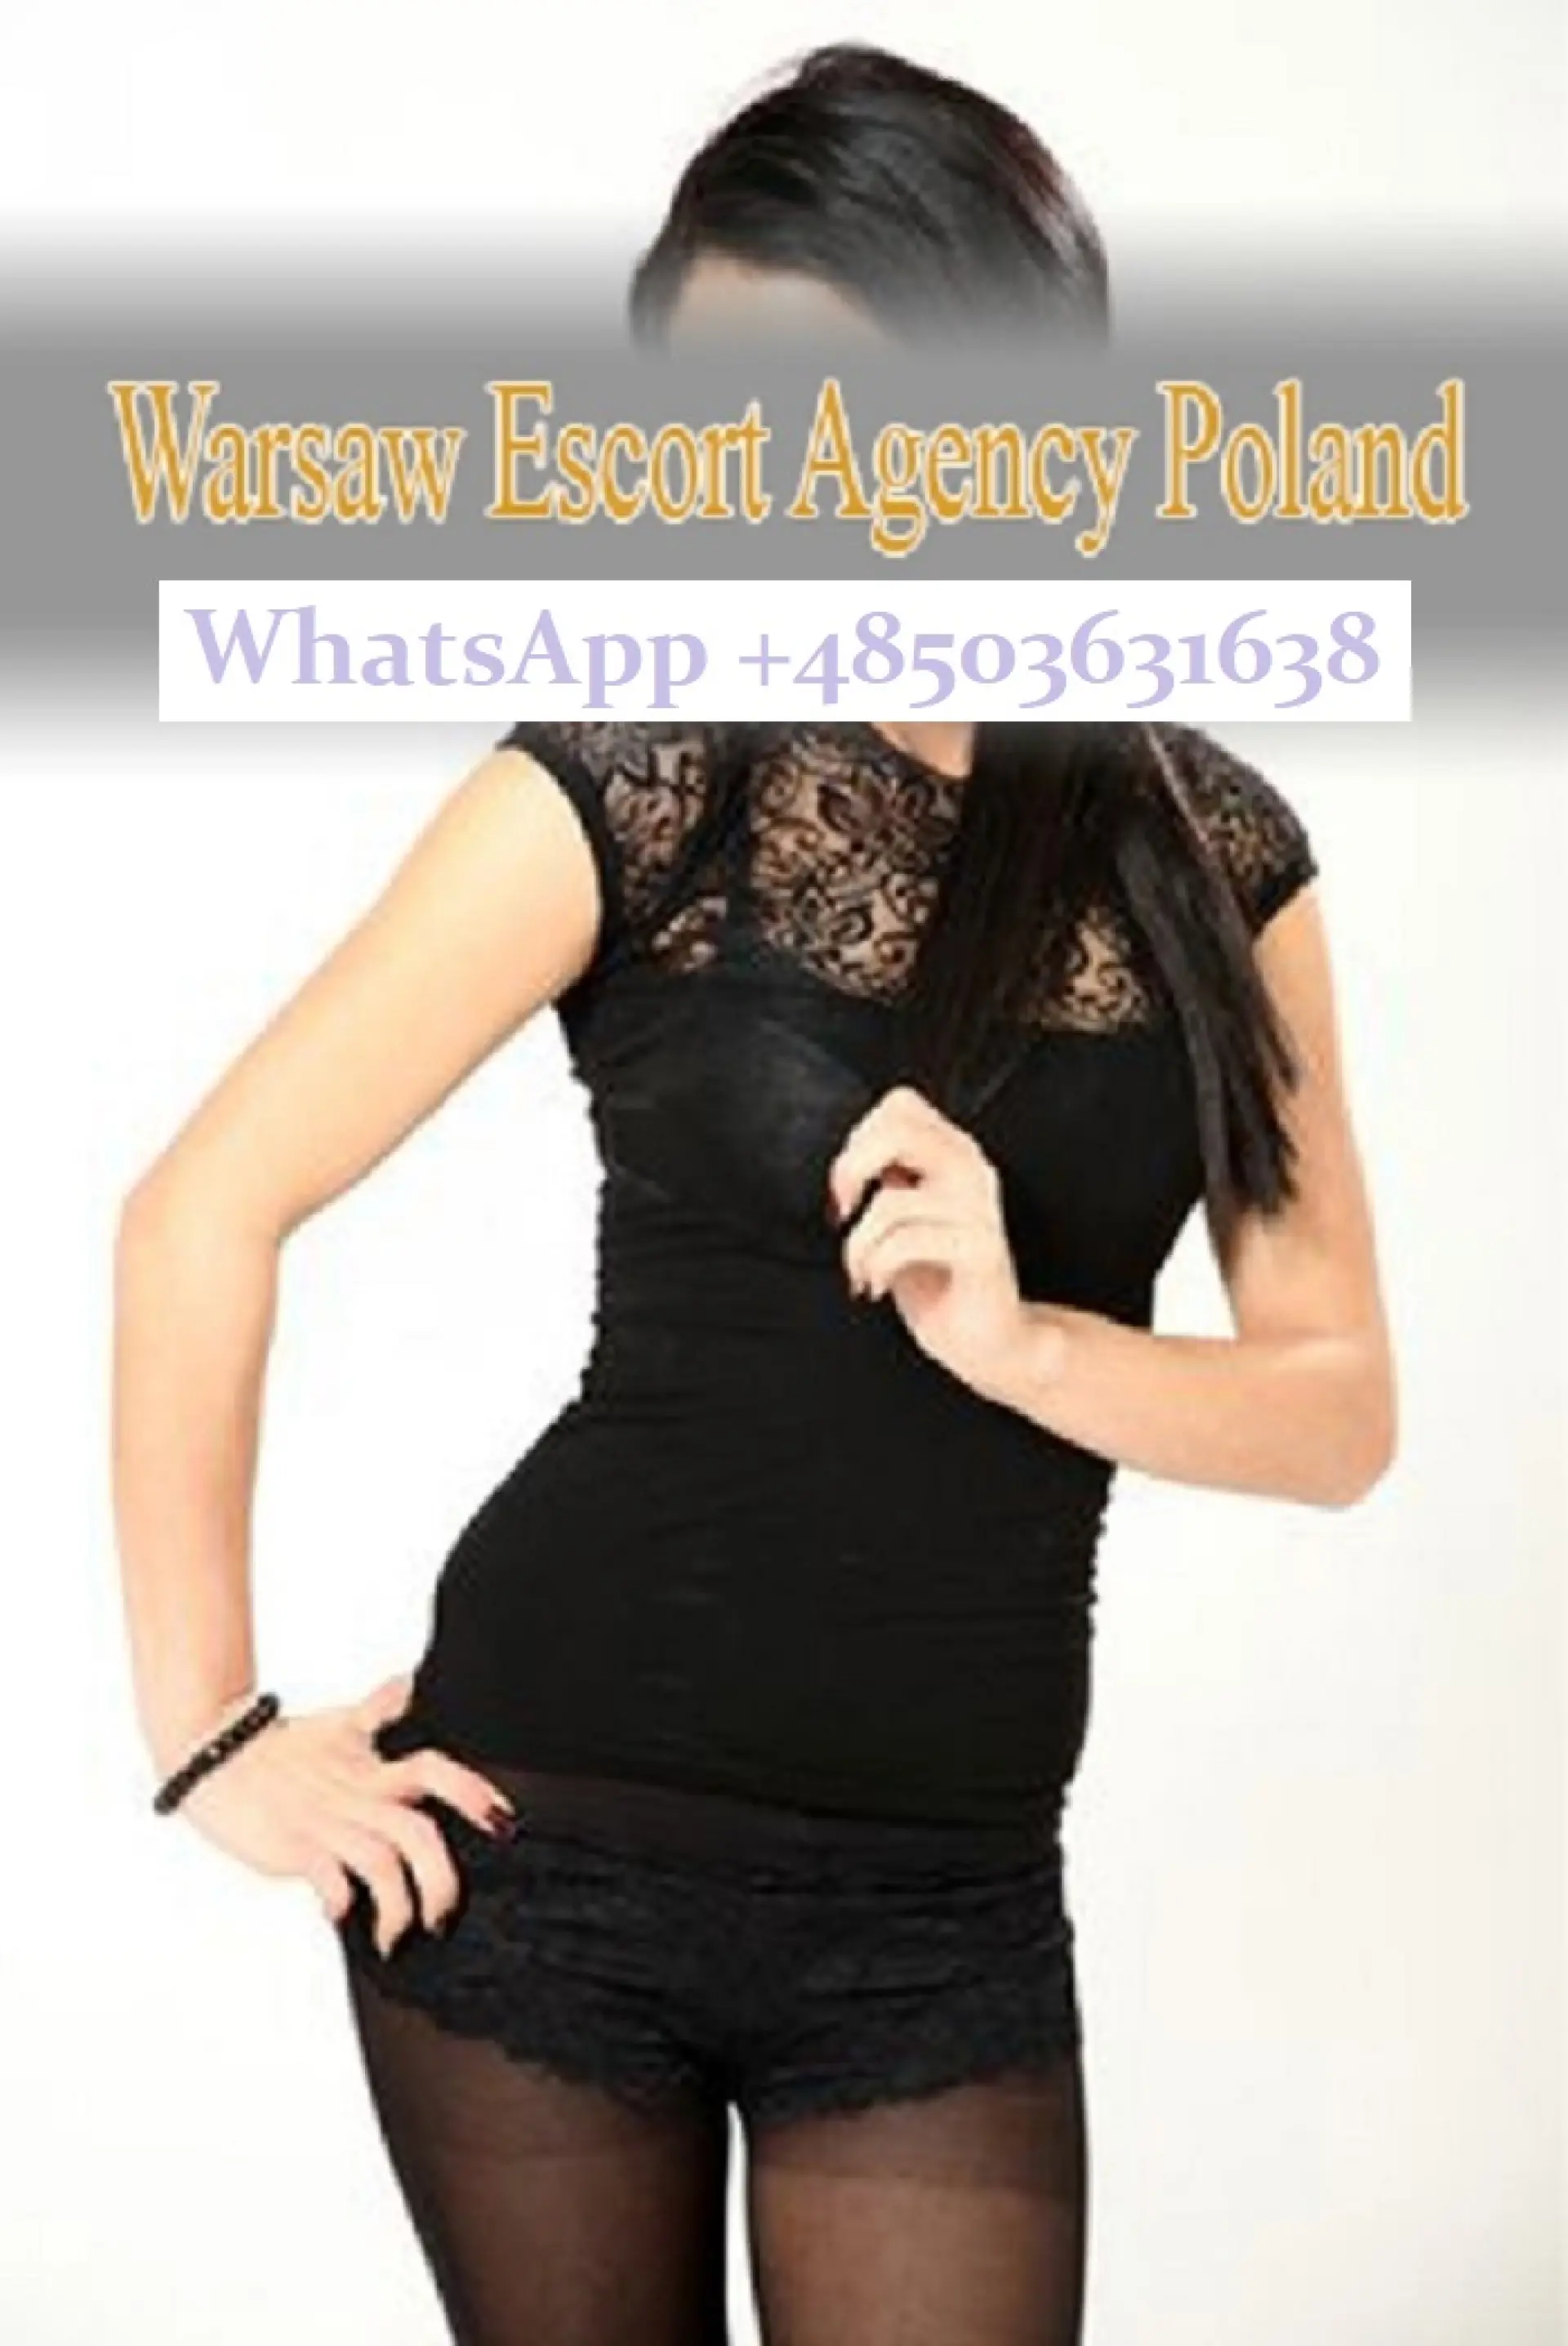 Amely Warsaw Escort Poland Agency